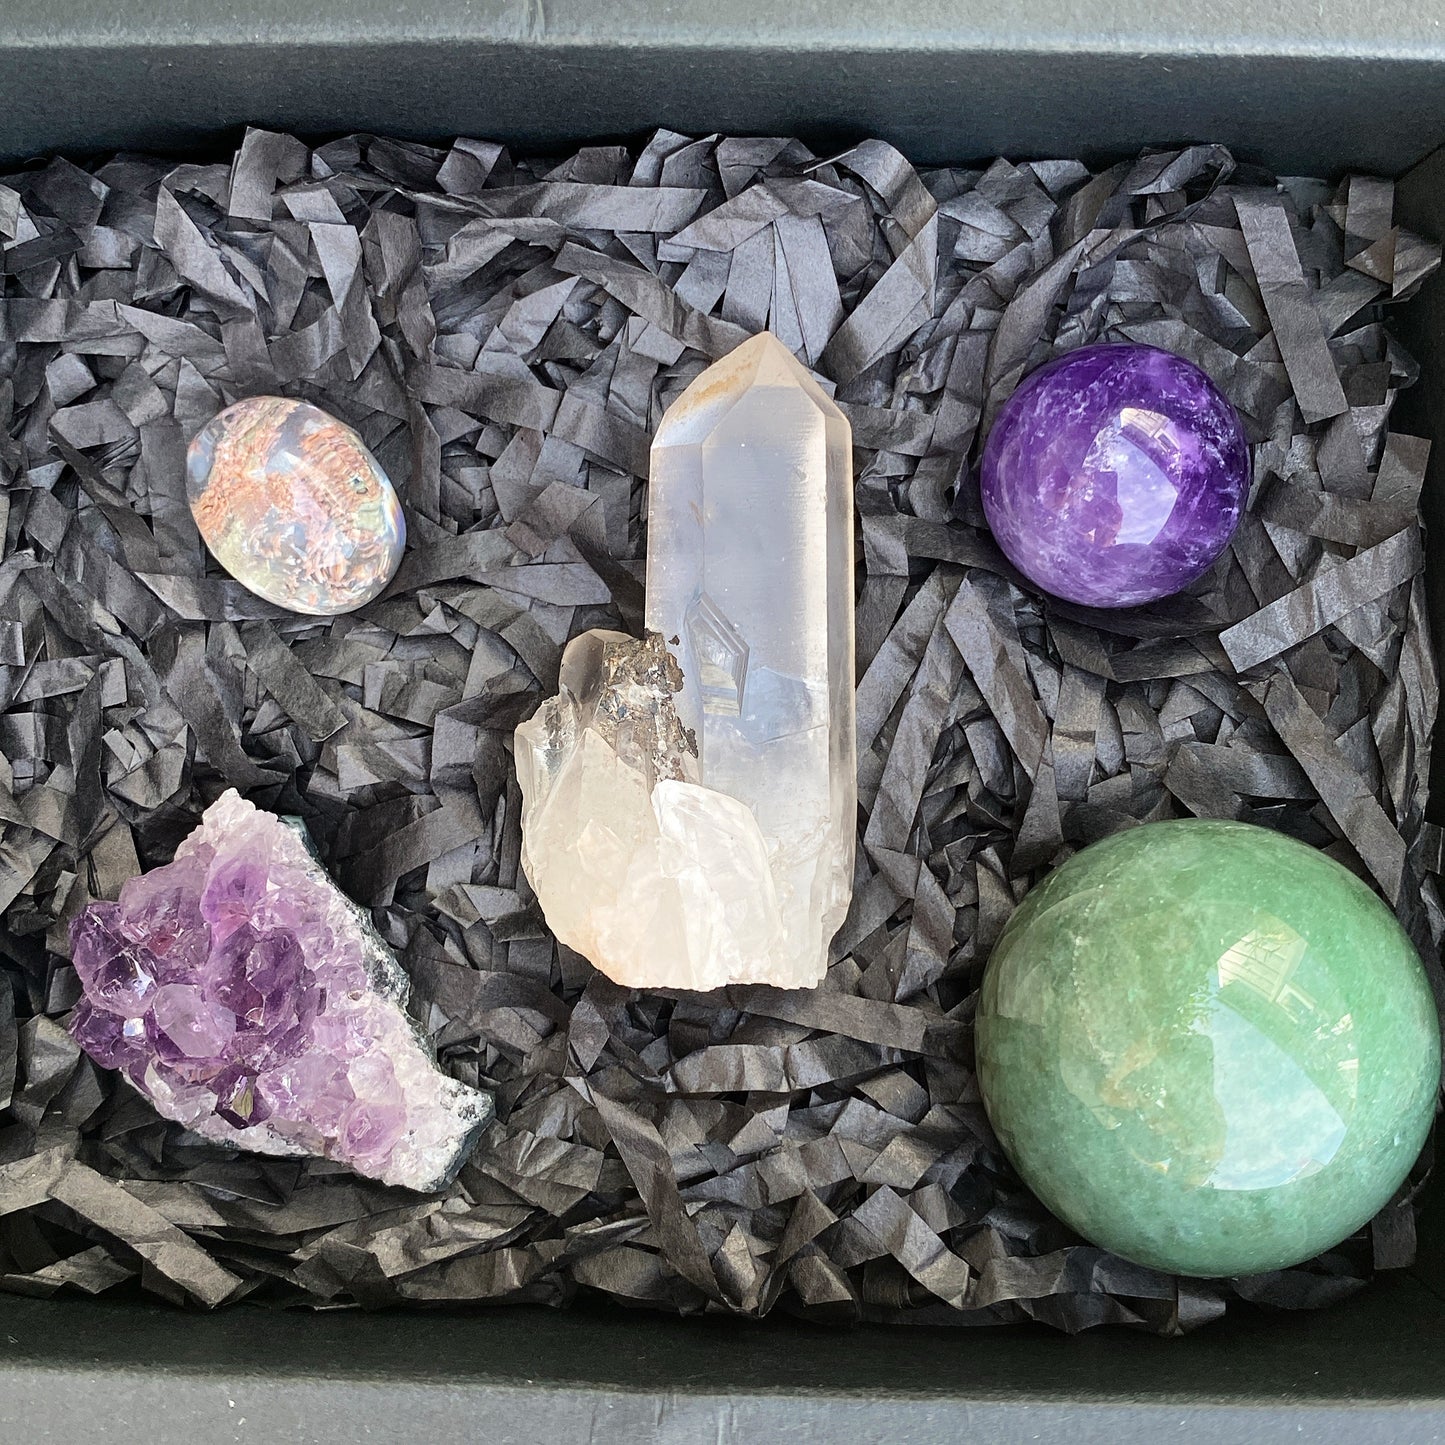 Garden Paradise Crystal Gift Box